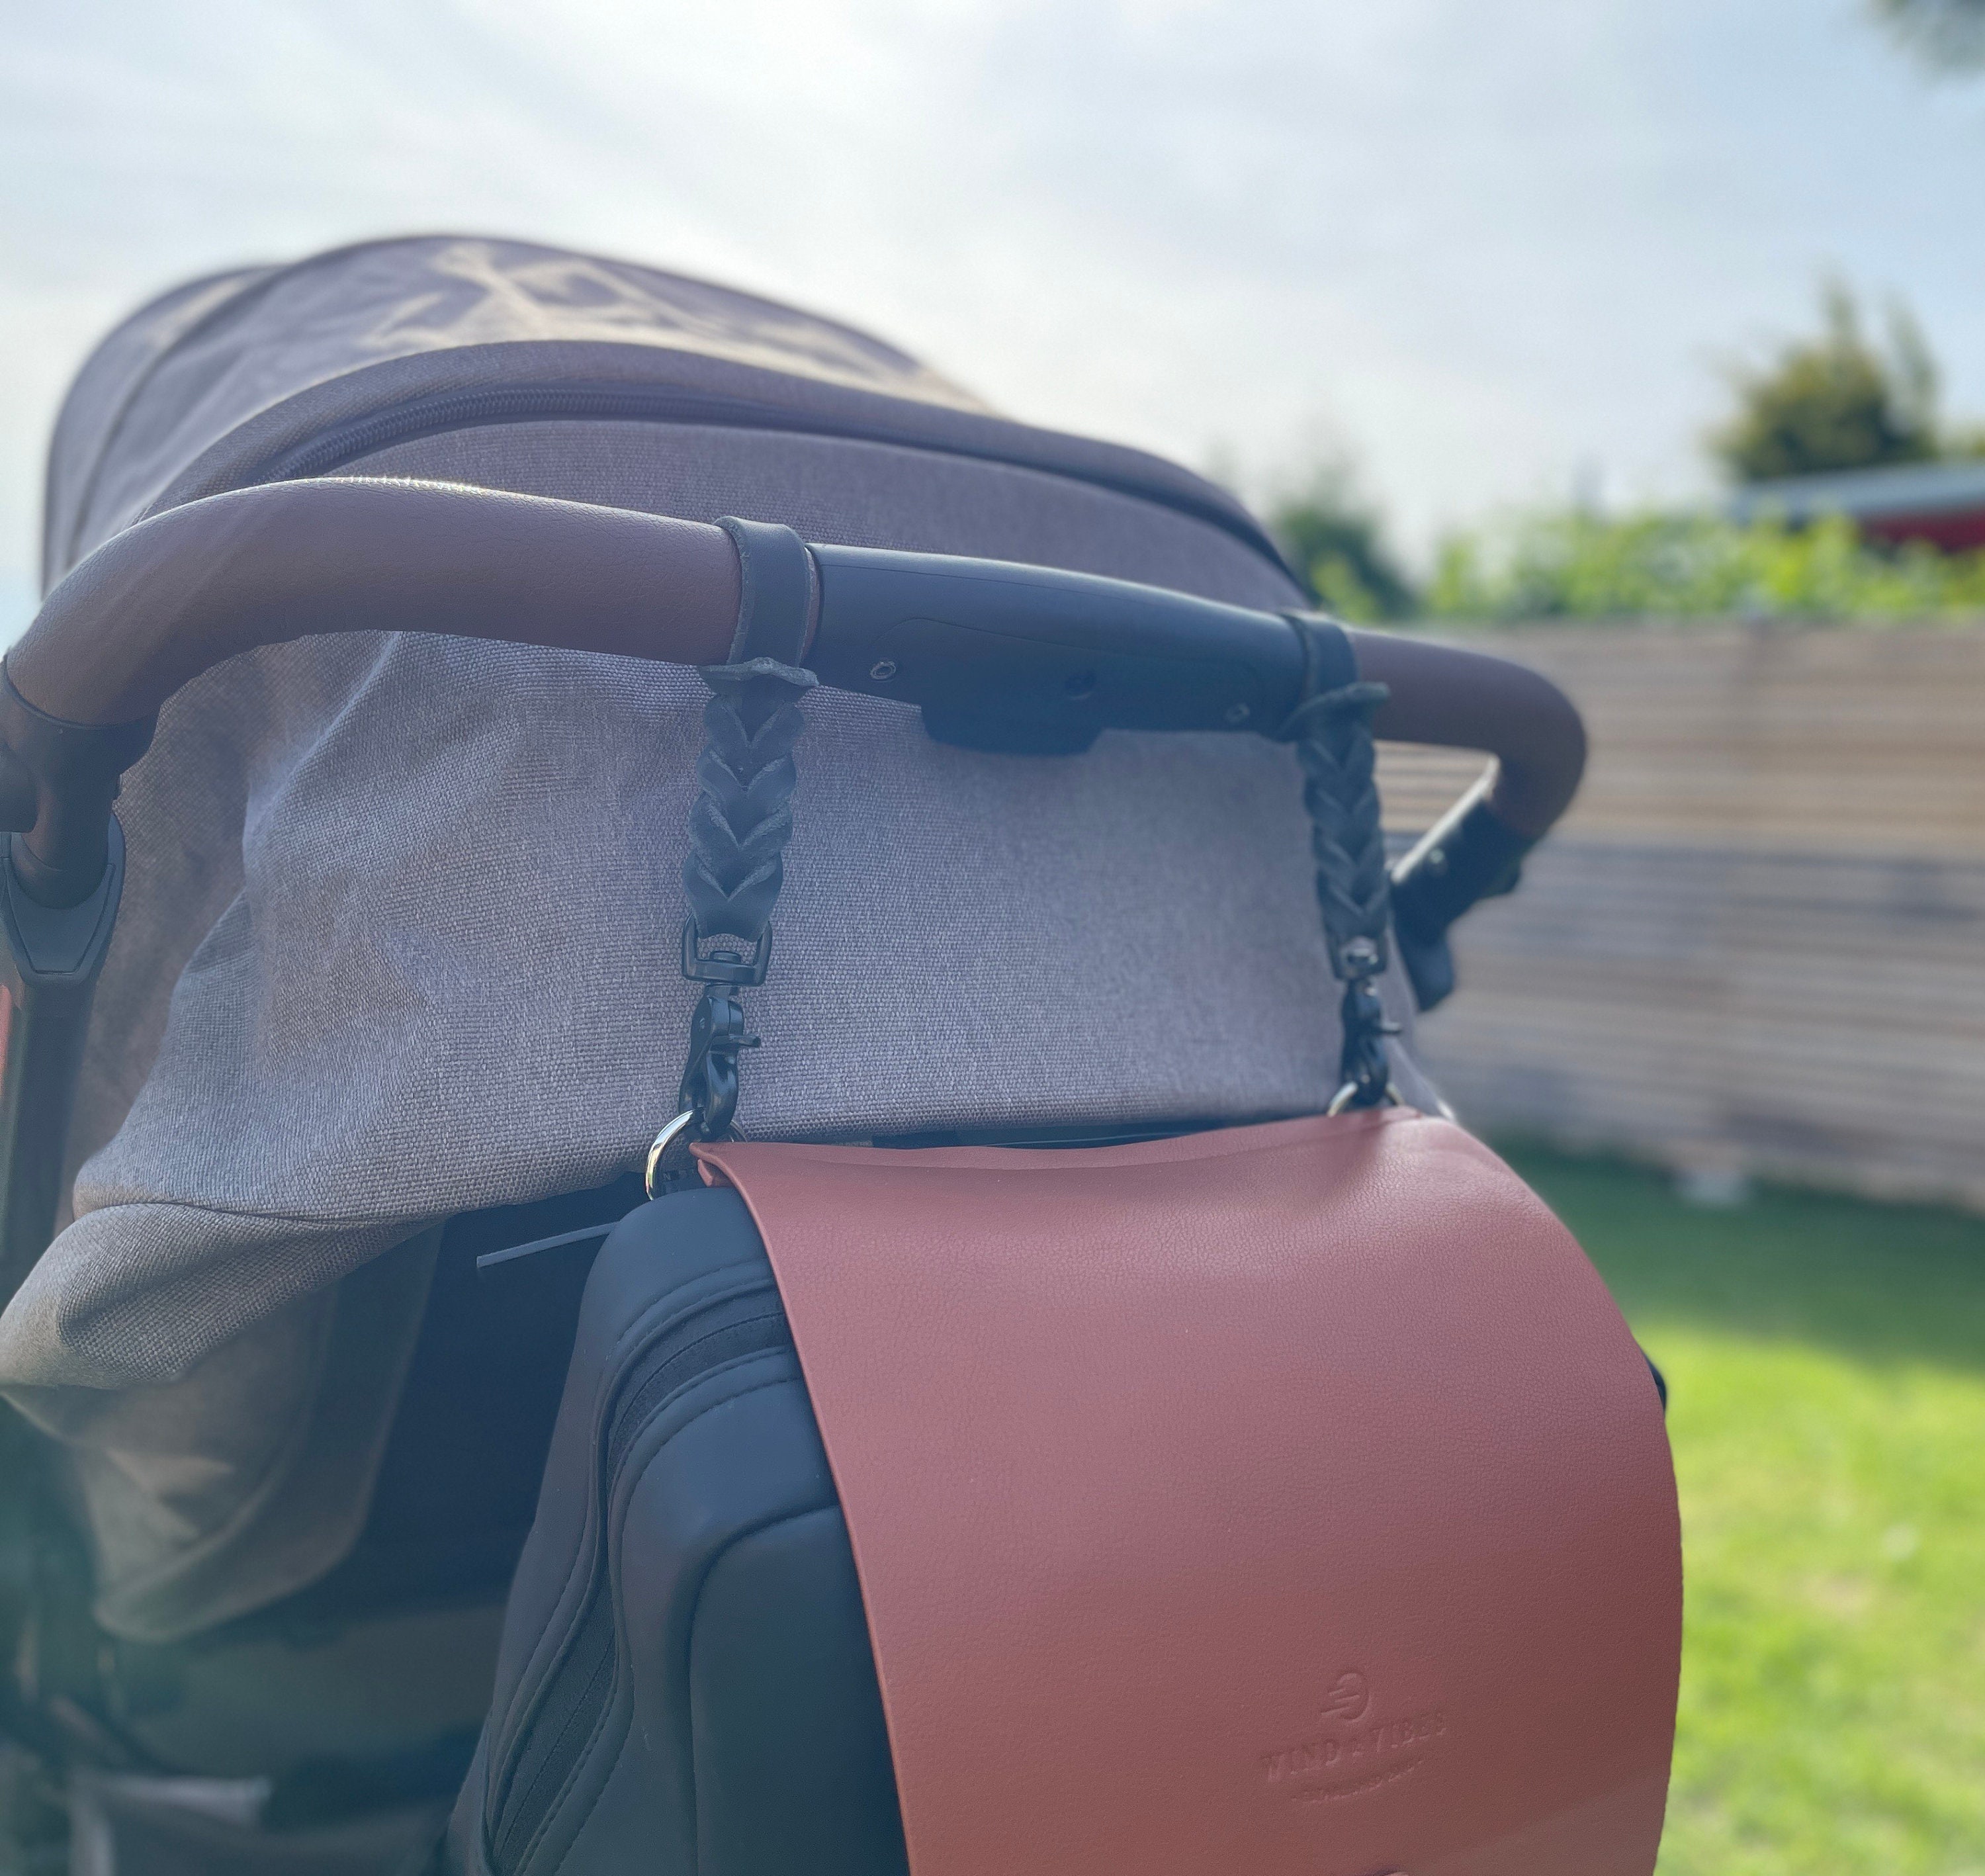 backpack hook /Rucksack-Haken by Modellbau D